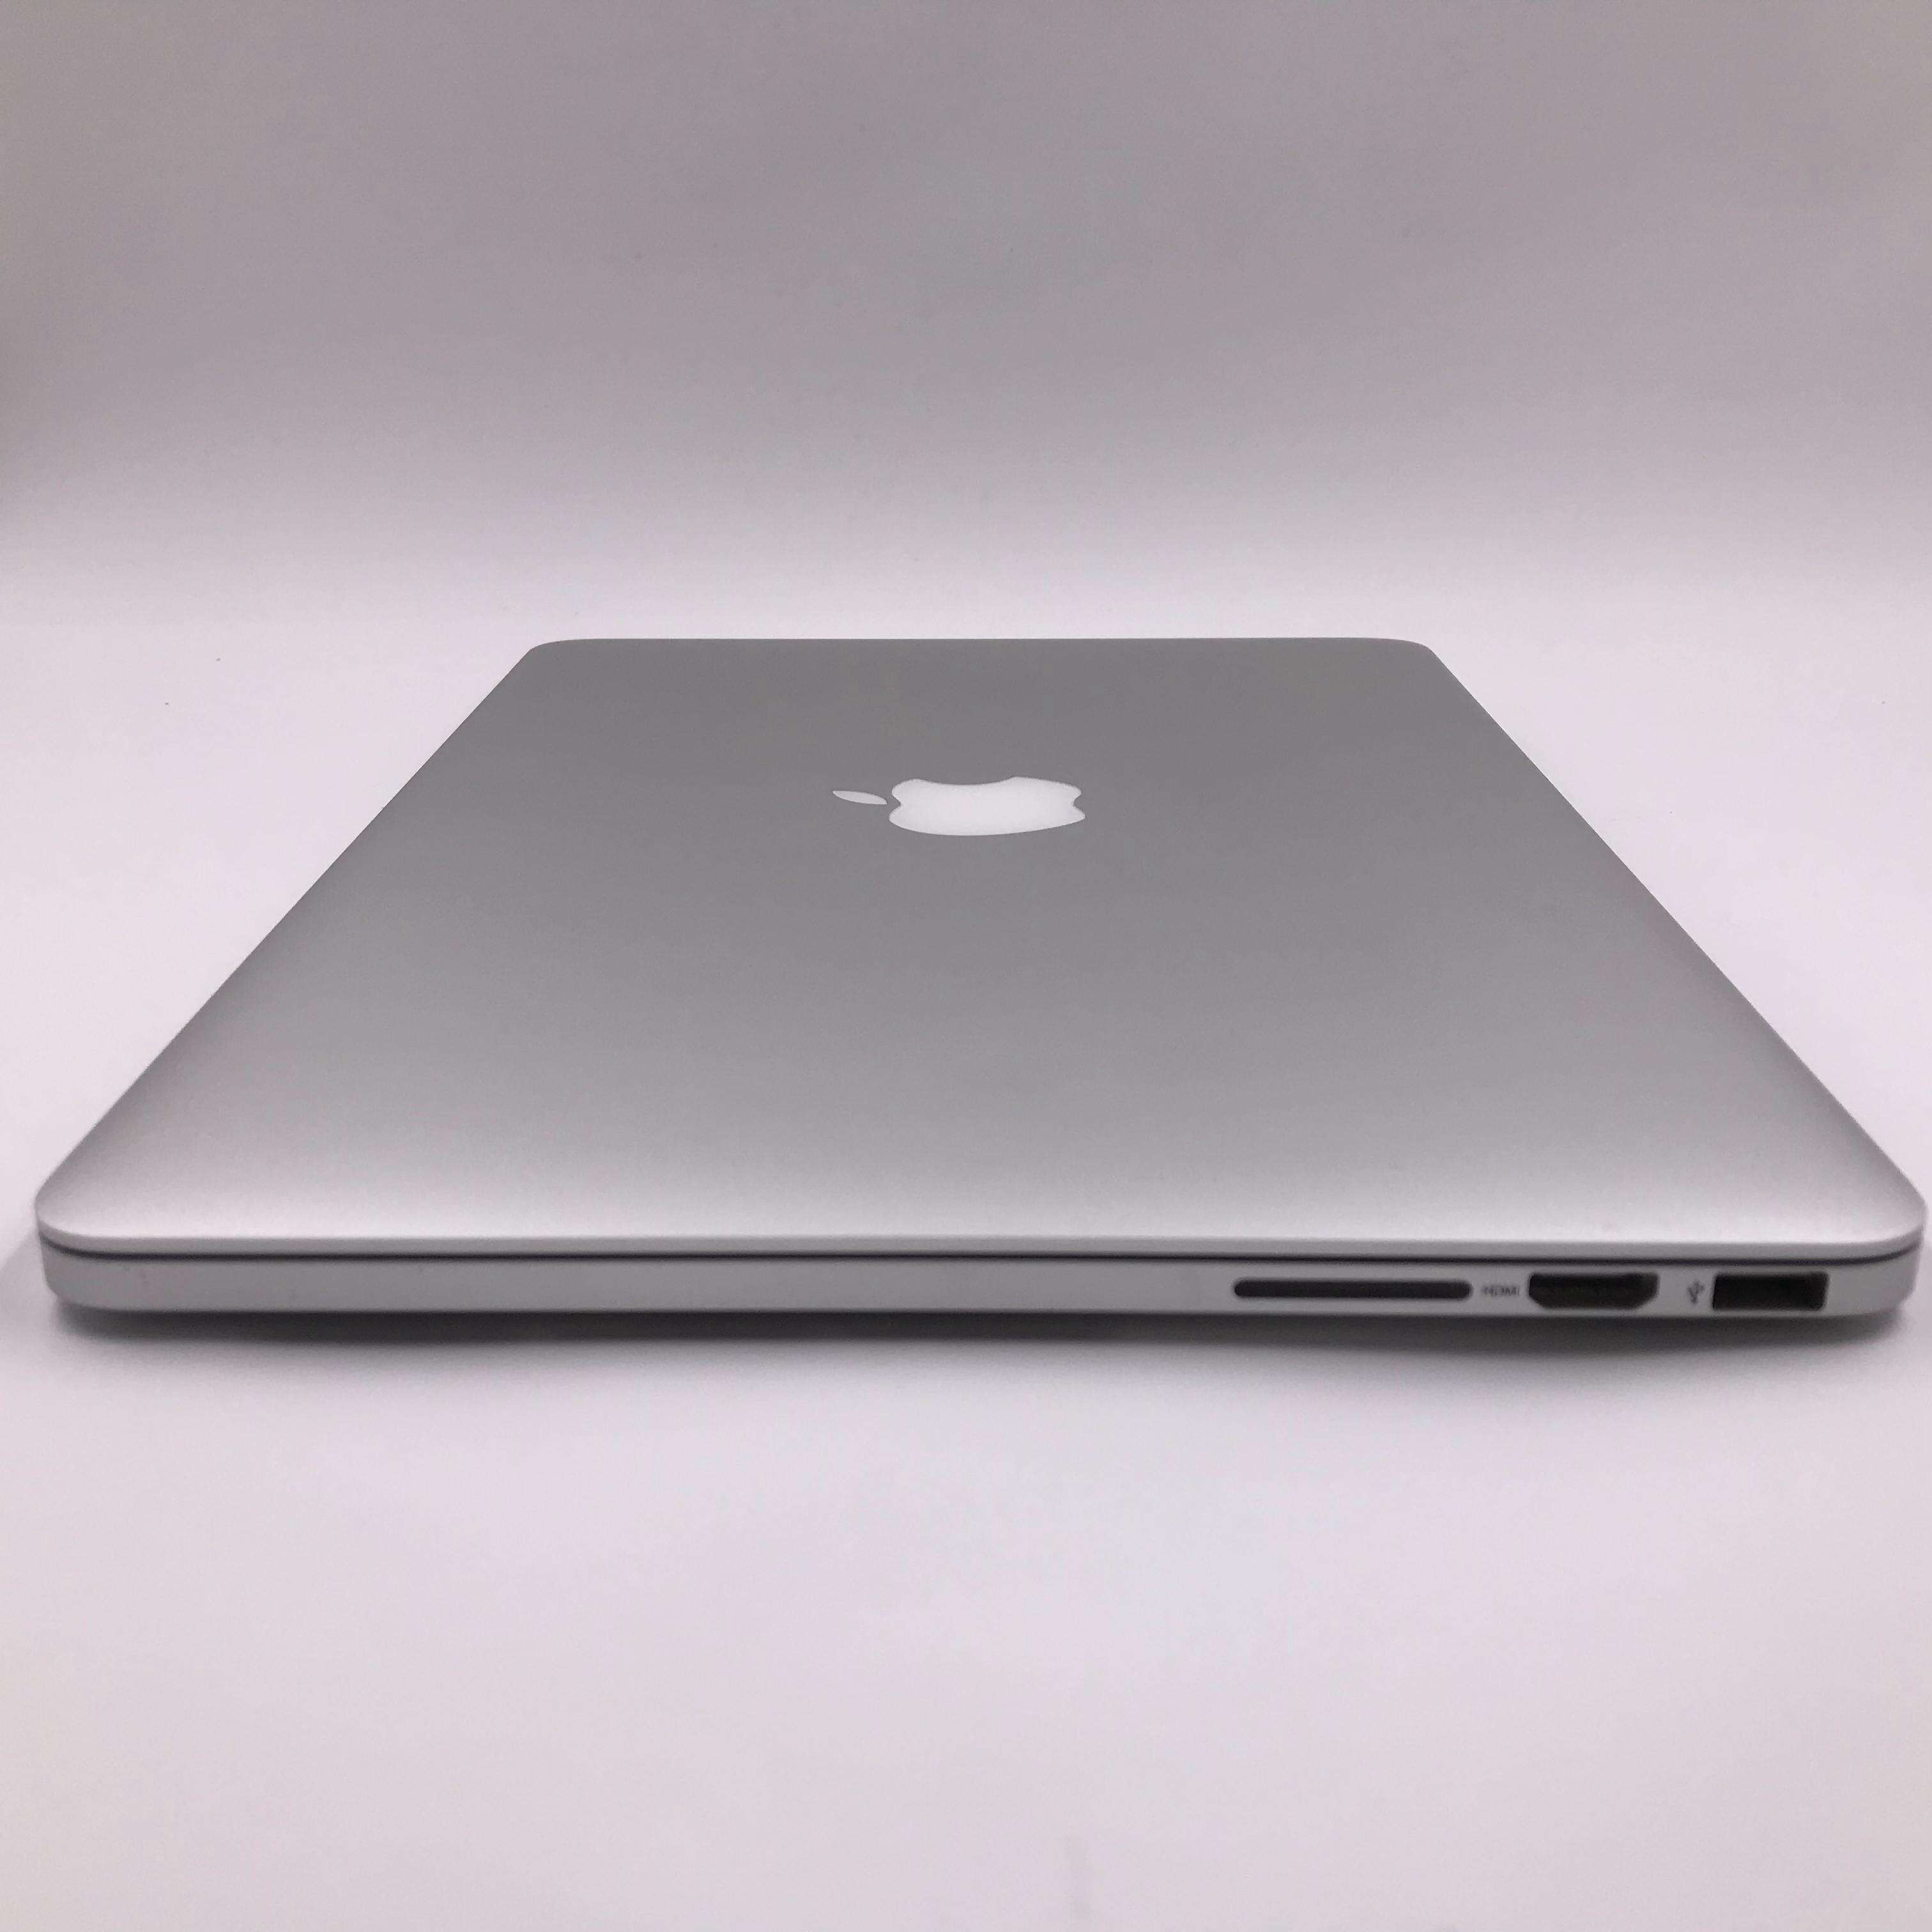 MacBook Pro (13",2015) 内存_8G/CPU_2.7GHz Intel Core i5/硬盘_128G 港版